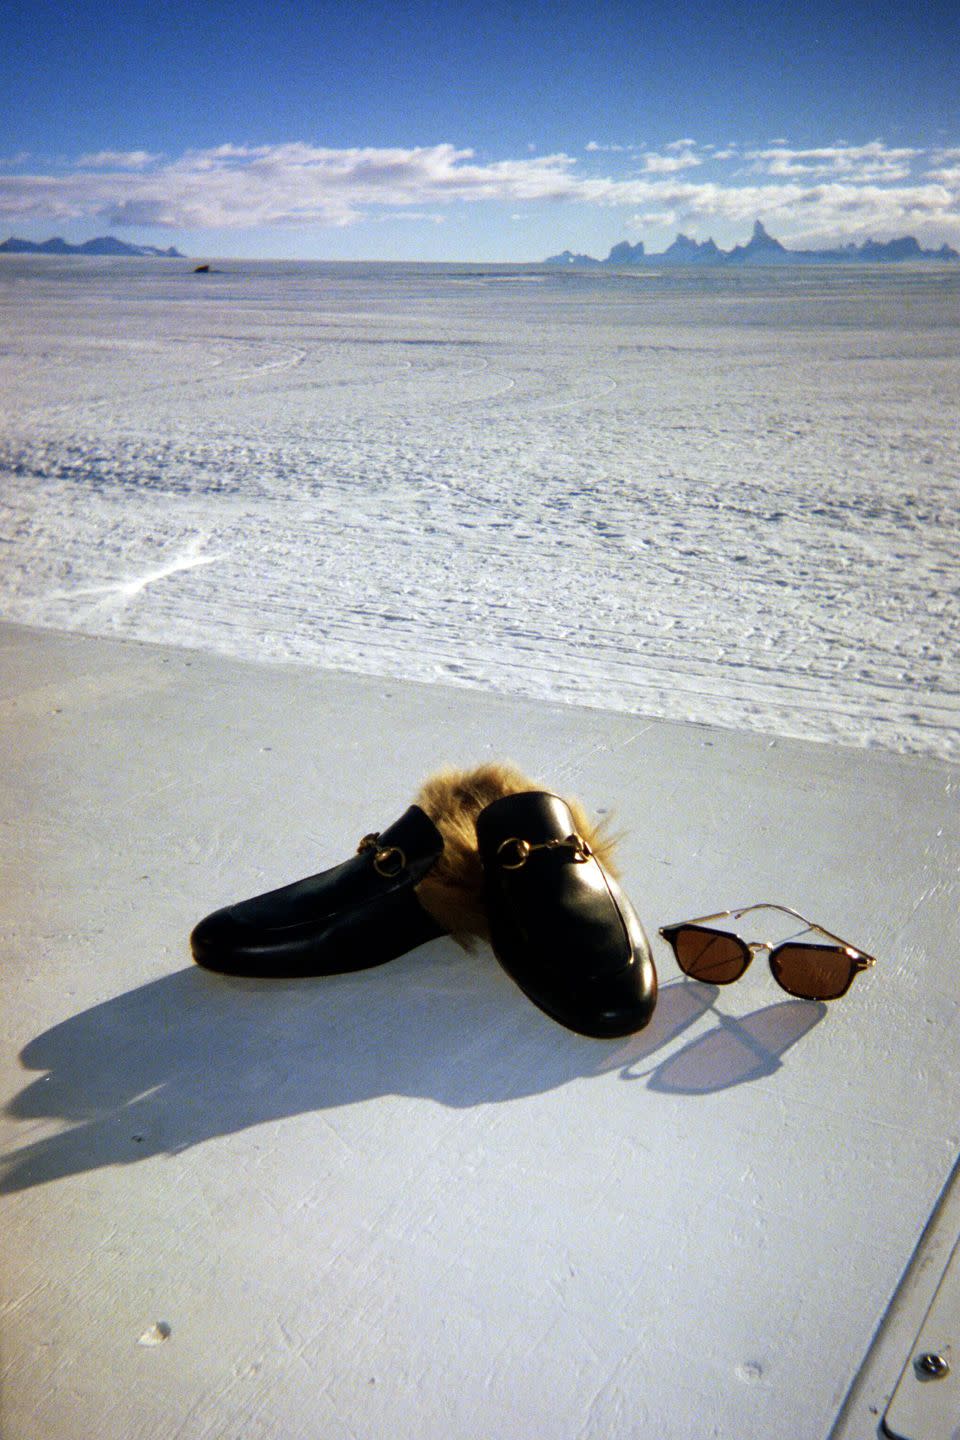 gucci slides and thom browne sunglasses in antarctica